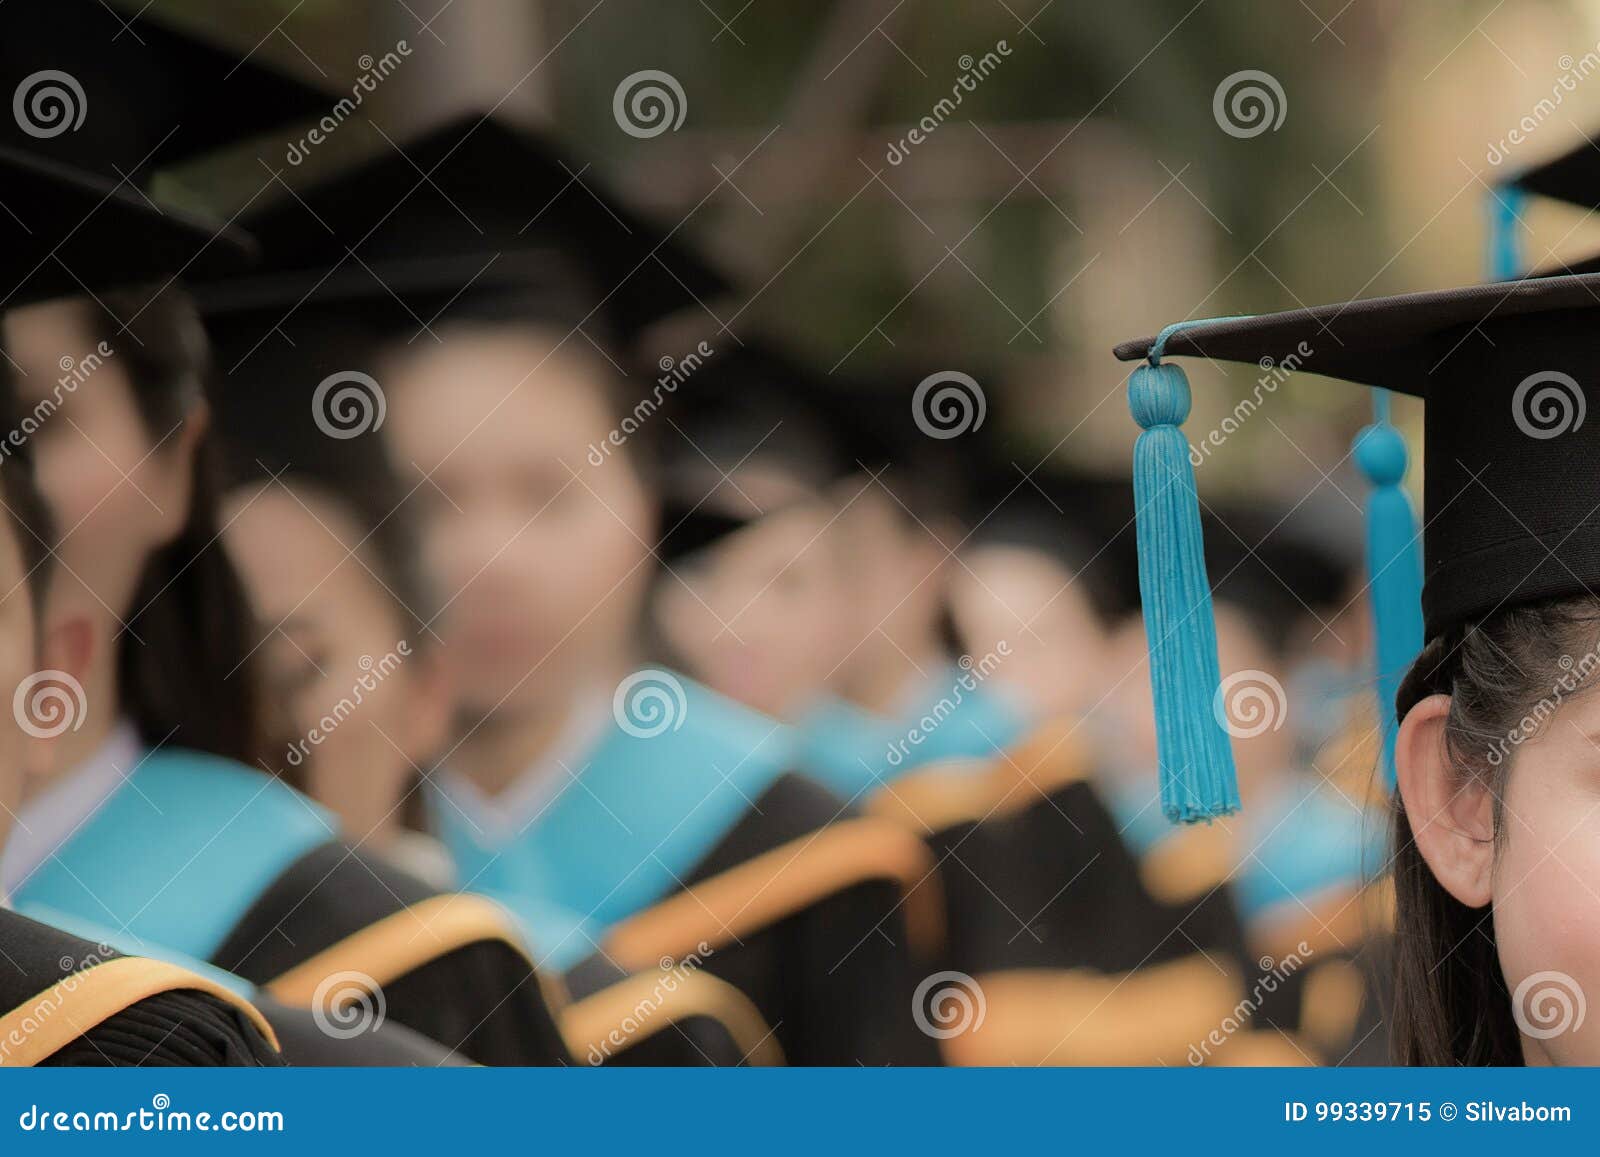 graduates in commencement graduation ceremony row, metaphor educ